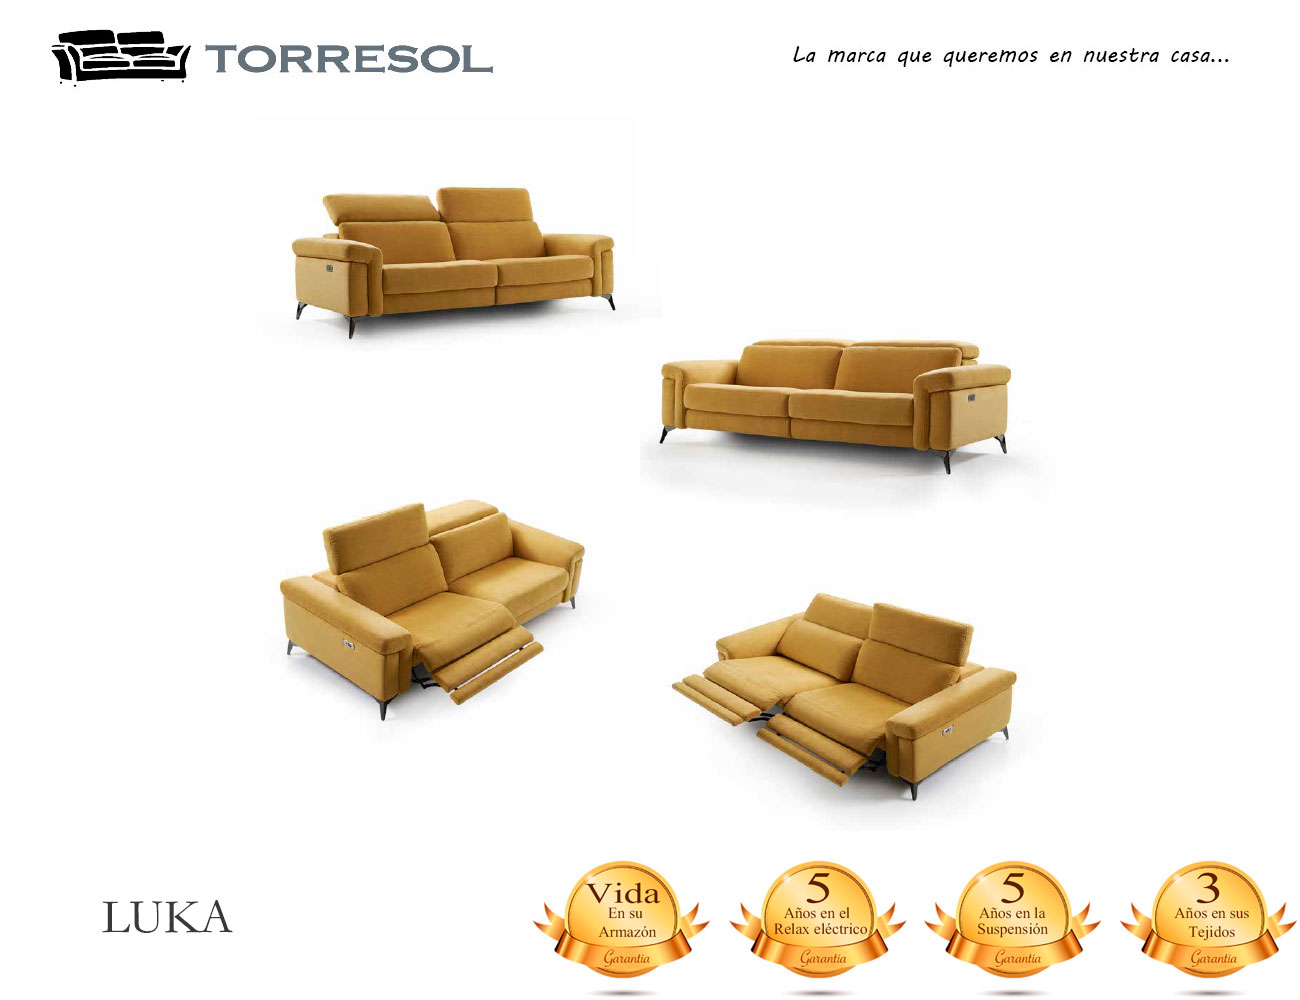 Sofa luka torresol 2